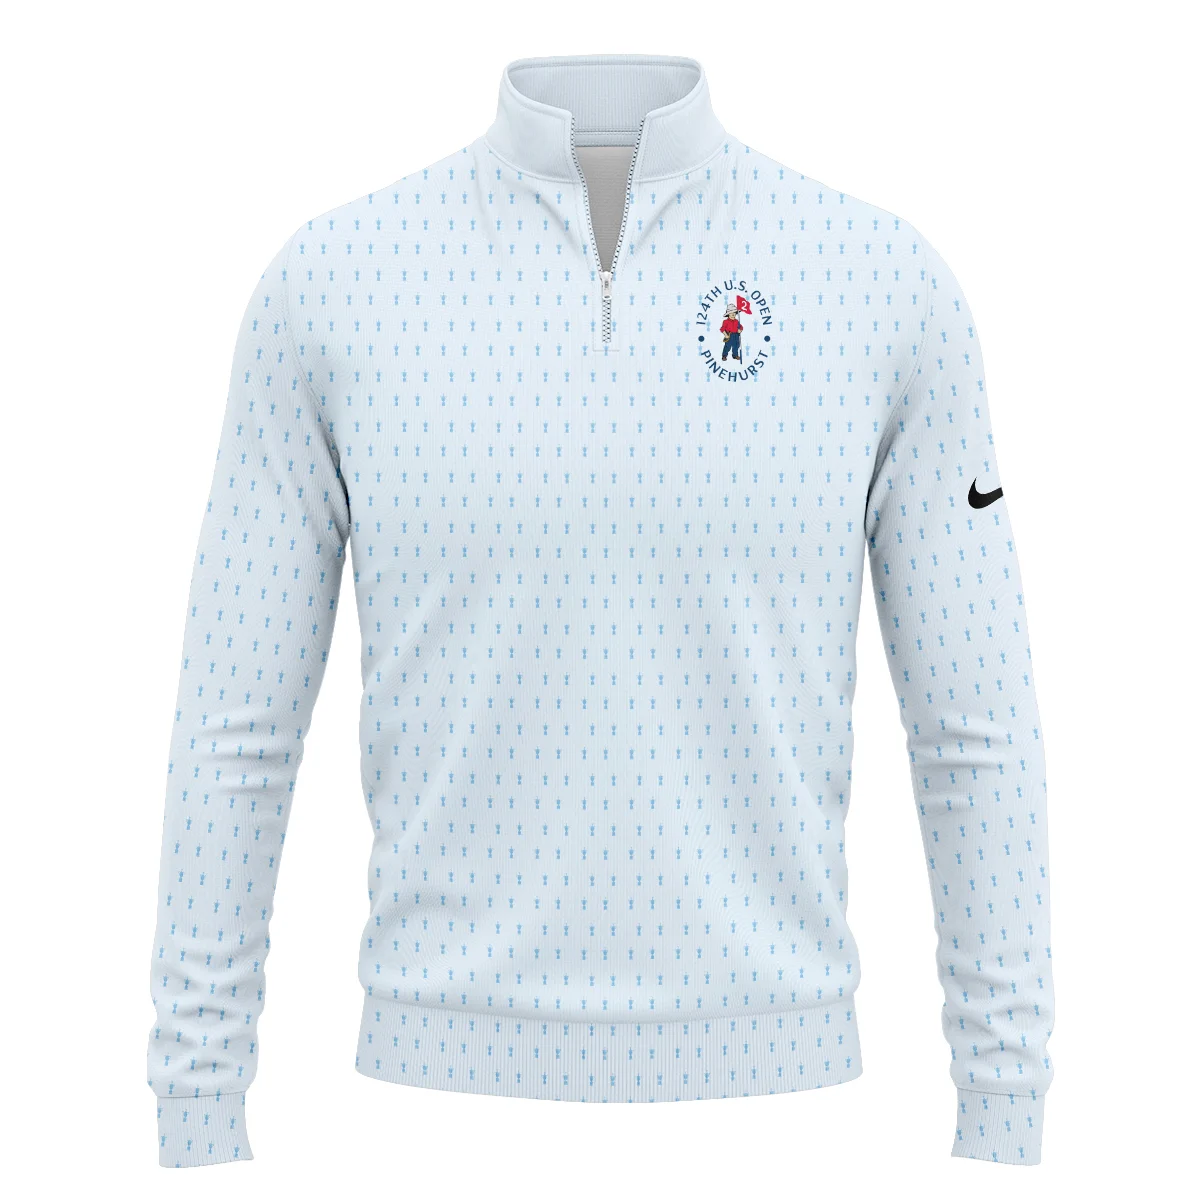 Golf Pattern Cup Light Blue Green 124th U.S. Open Pinehurst Nike Hoodie Shirt Style Classic Hoodie Shirt